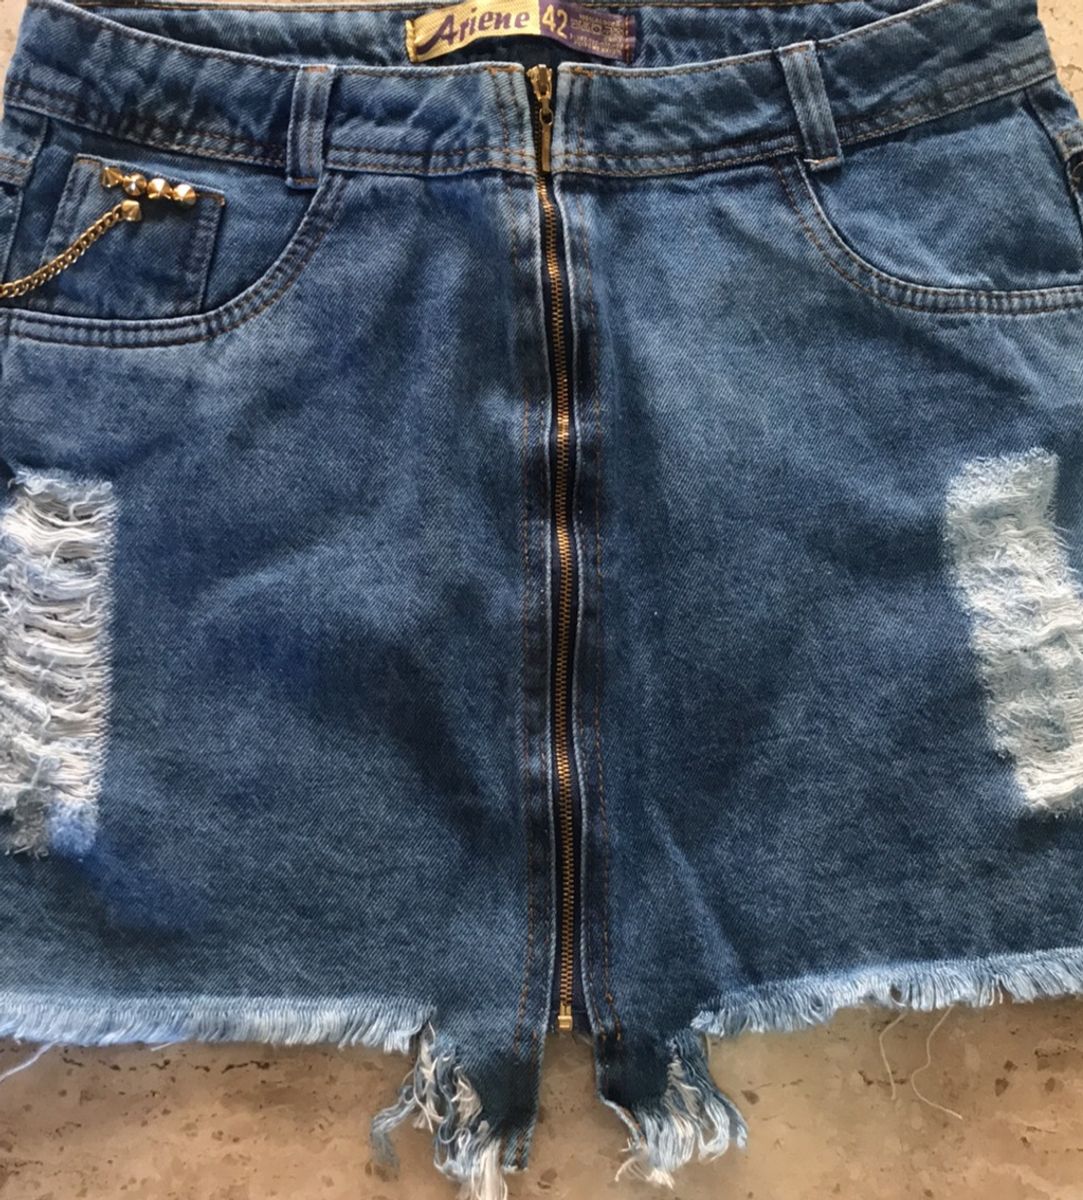 customizar saia jeans